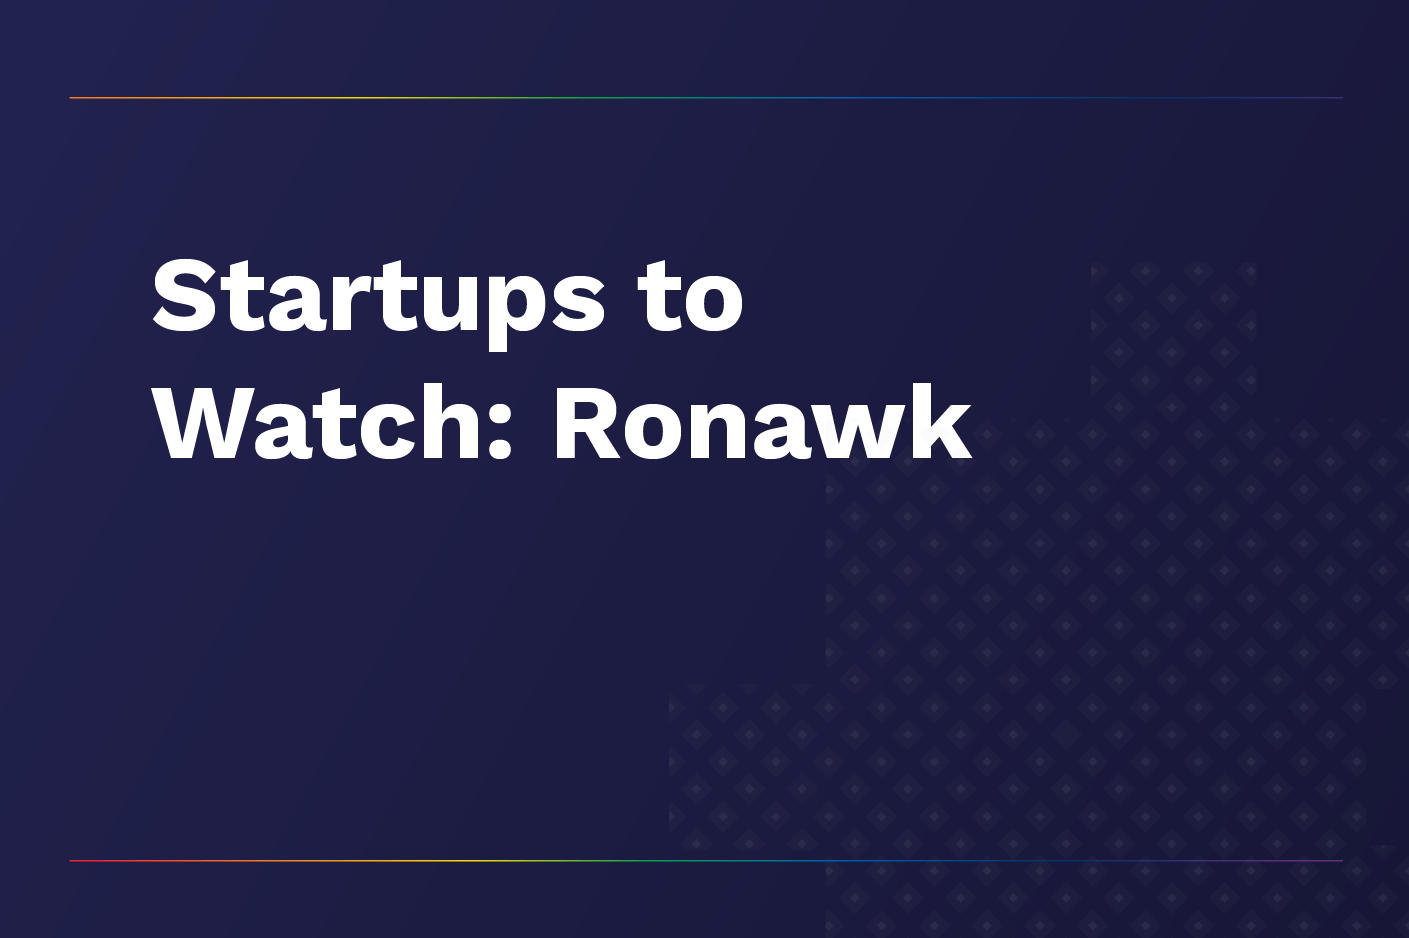 ronawk startups to watch ronawk blog images 6 09